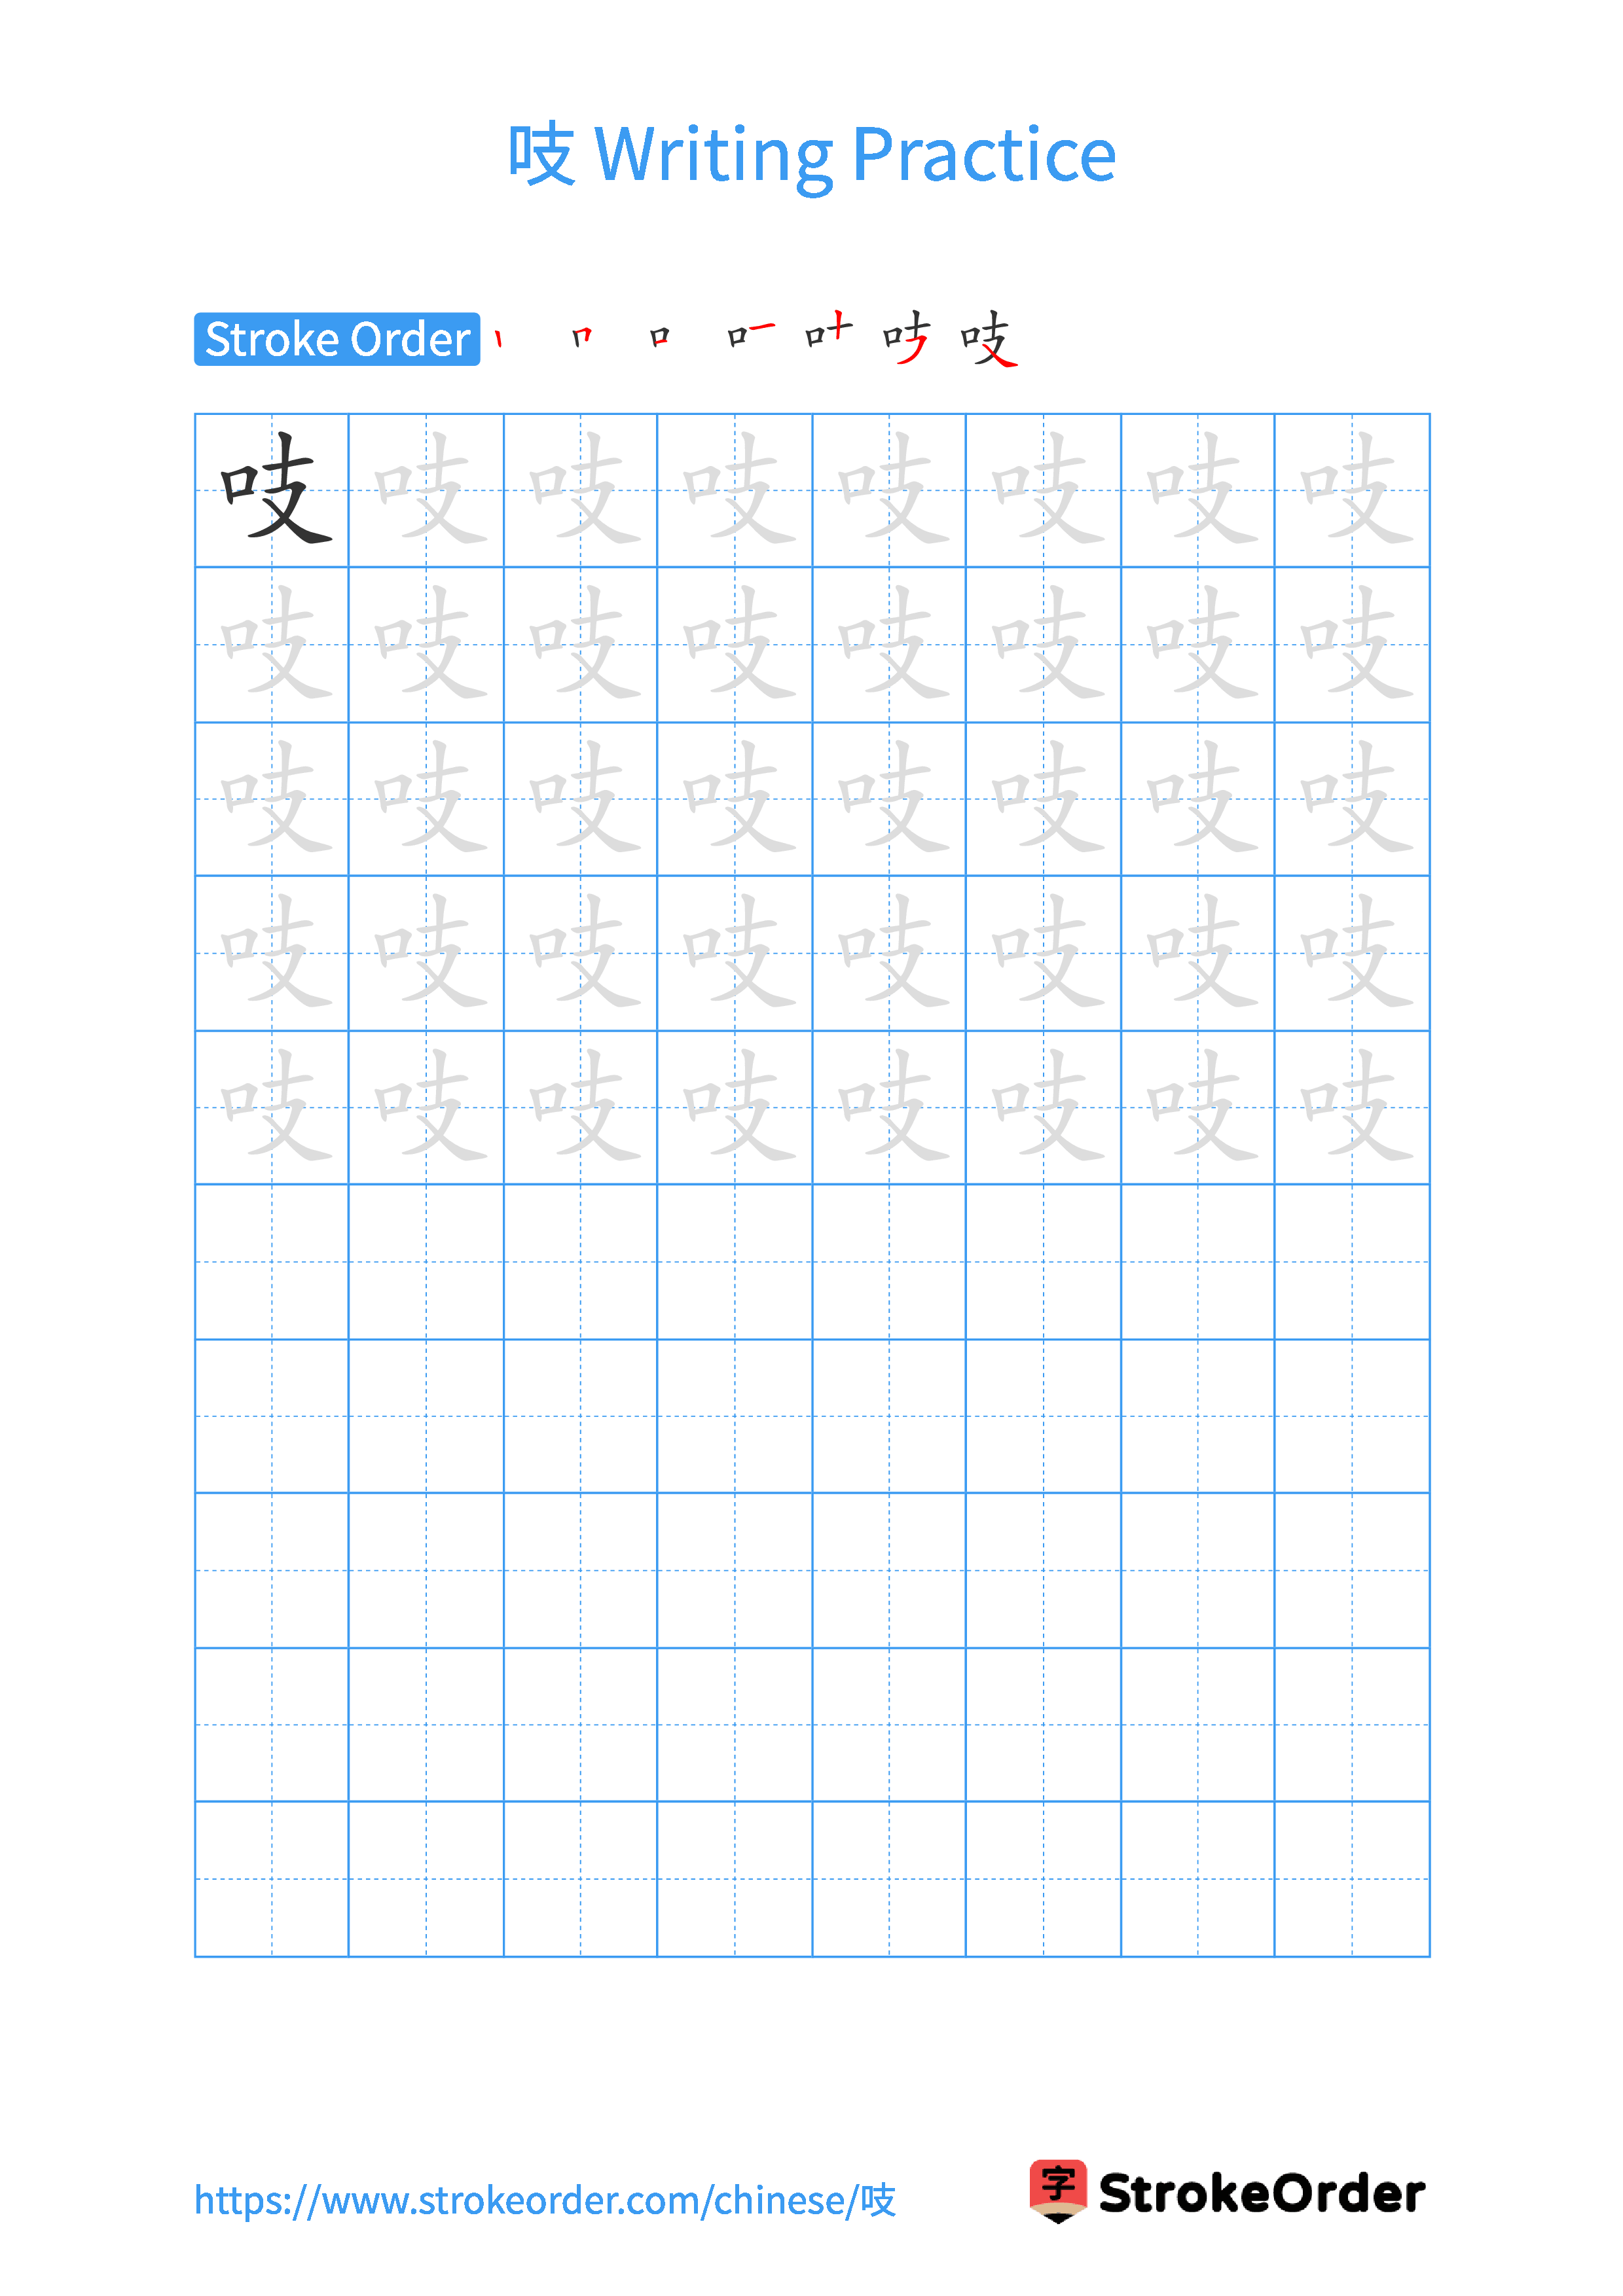 Printable Handwriting Practice Worksheet of the Chinese character 吱 in Portrait Orientation (Tian Zi Ge)